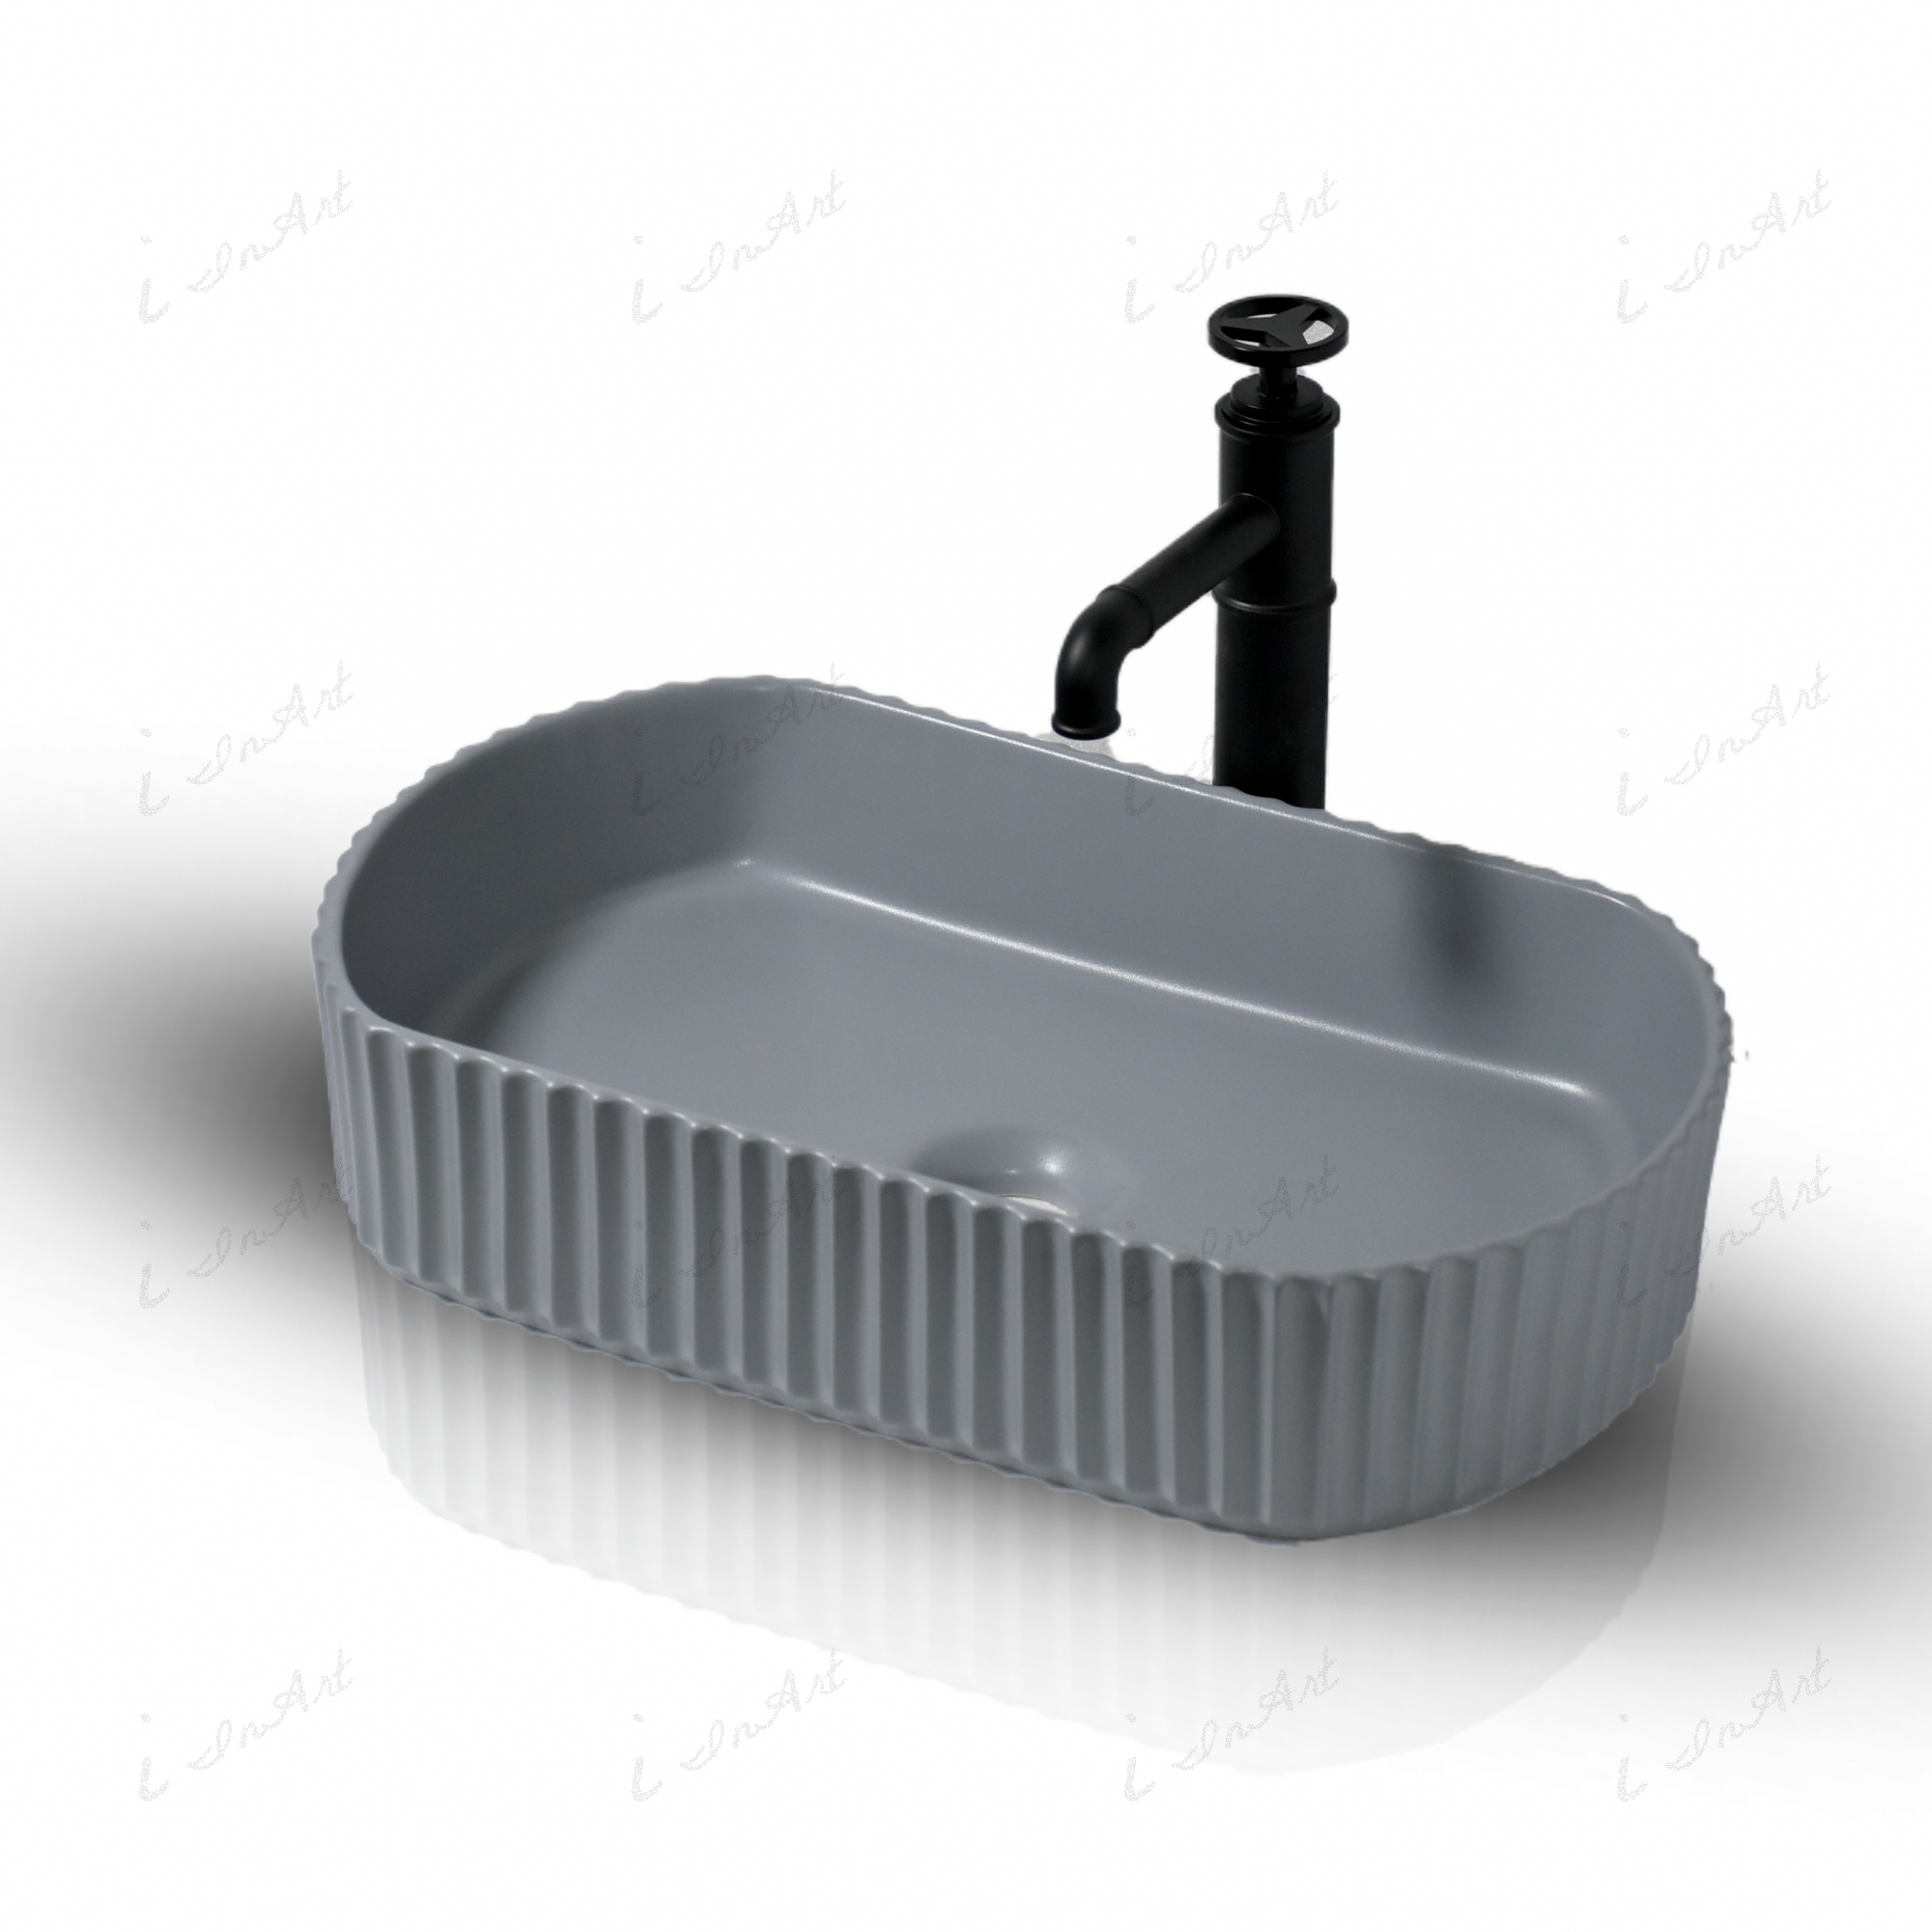 InArt Oval Bathroom Ceramic Vessel Sink Art Basin in Grey Matte Color